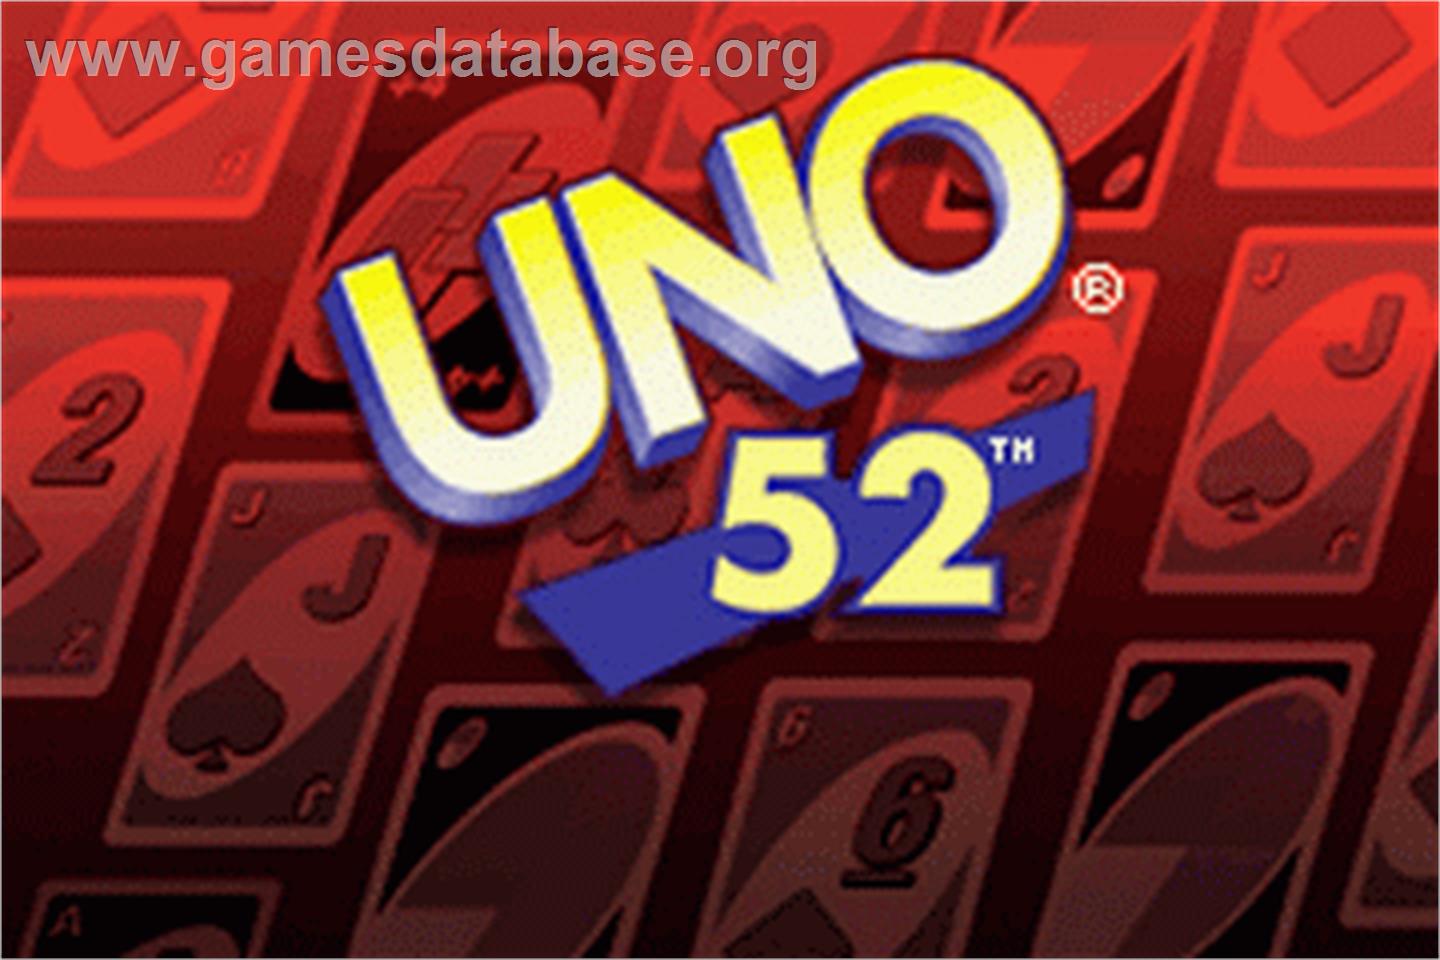 Uno 52 - Nintendo Game Boy Advance - Artwork - Title Screen